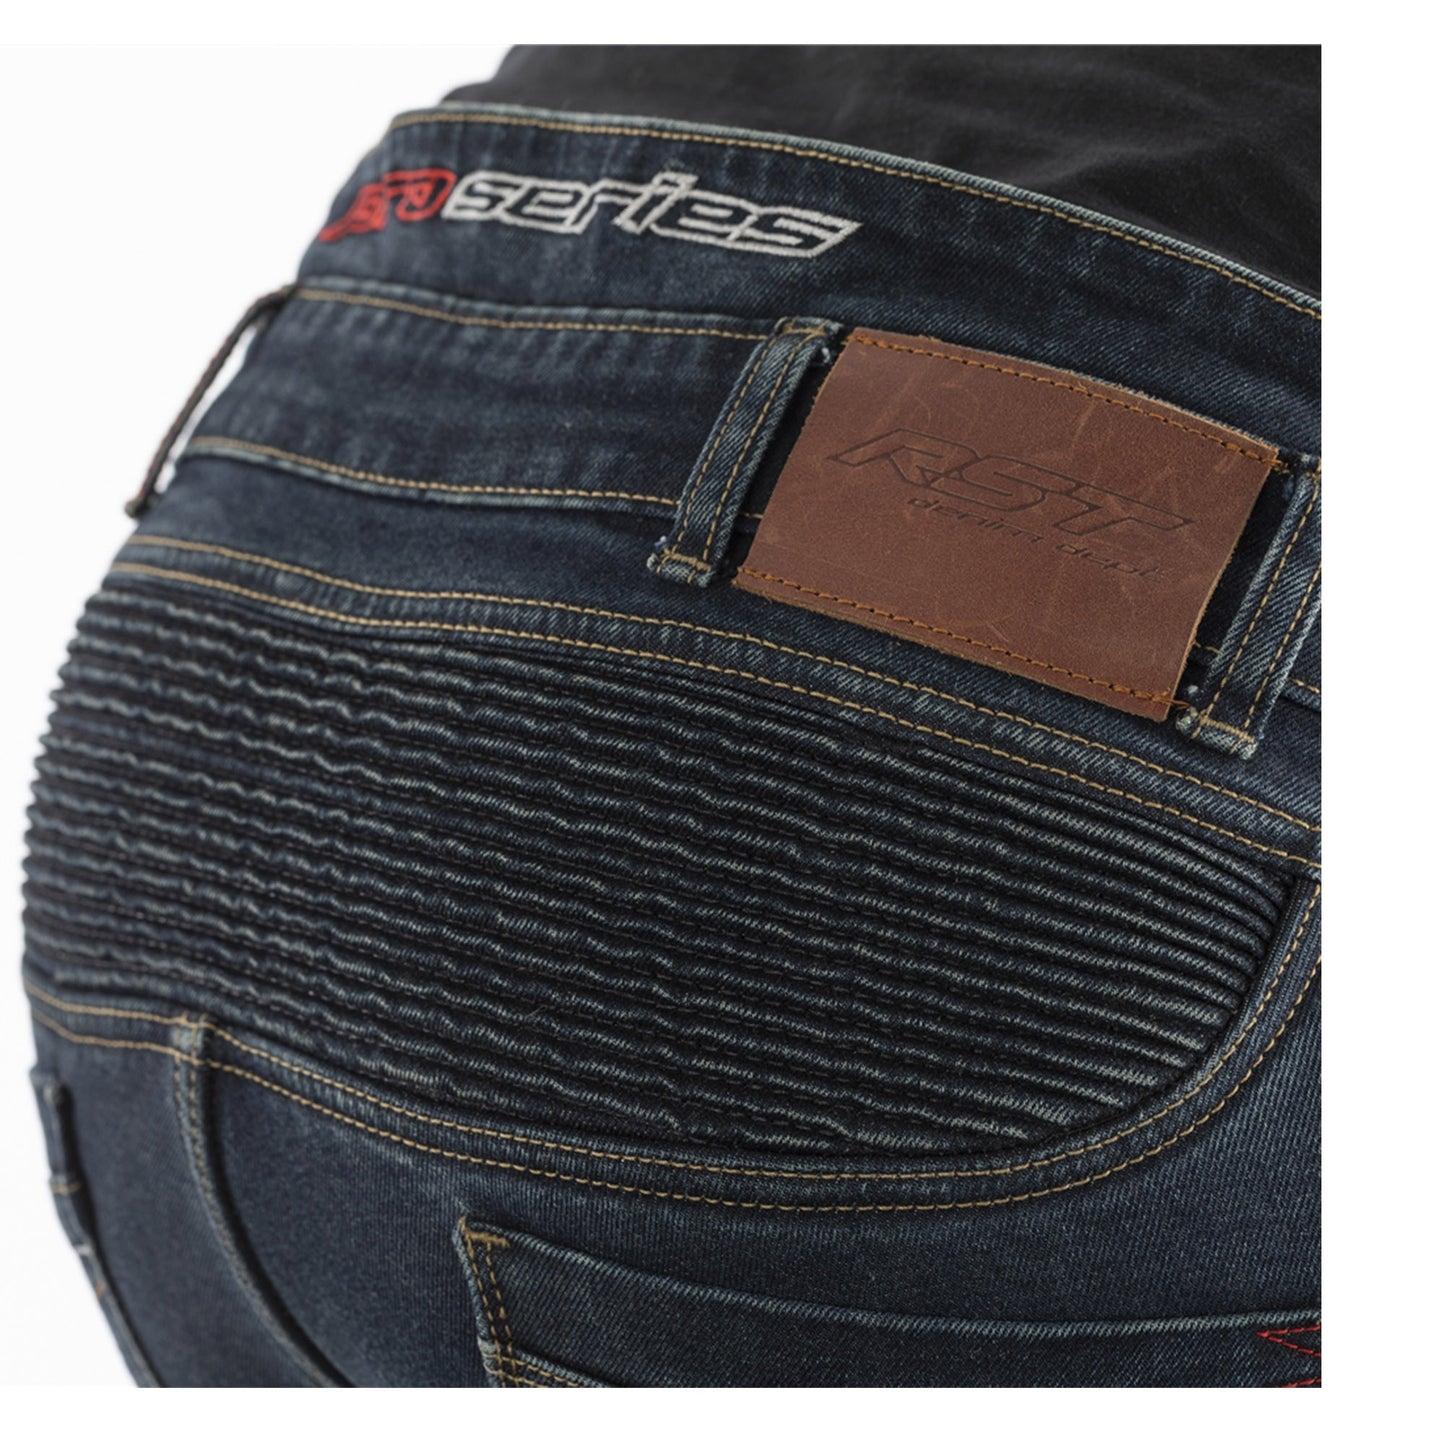 RST Reinforced Tech Pro CE Men's Denim Jeans - Includes Knee and Hip Armour - Regular Length - Dark Wash Blue